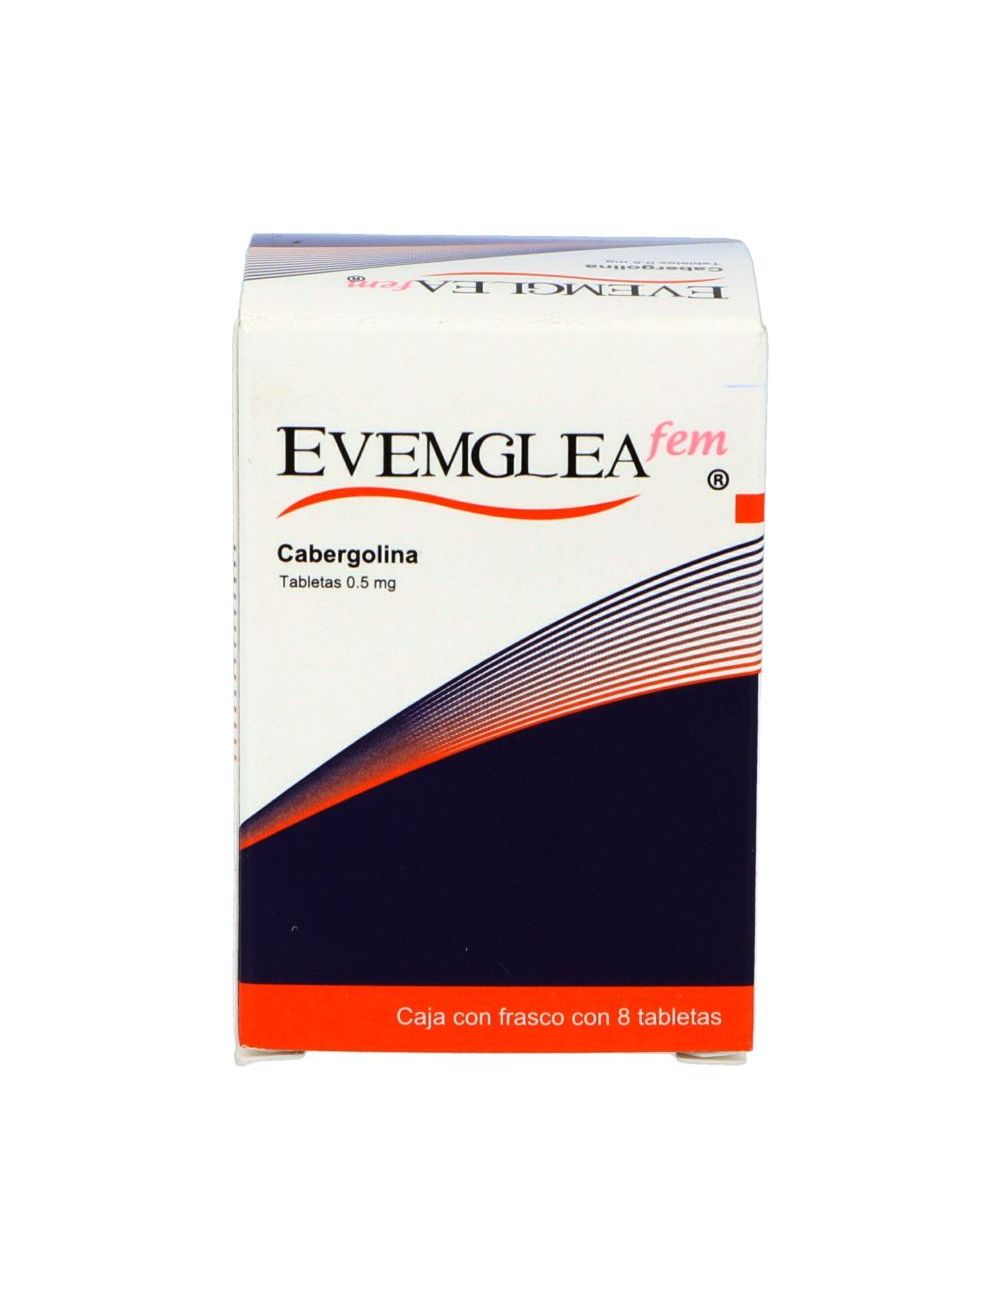 Evemglea Fem 0.5 mg Caja Con Frasco Con 8 Tabletas